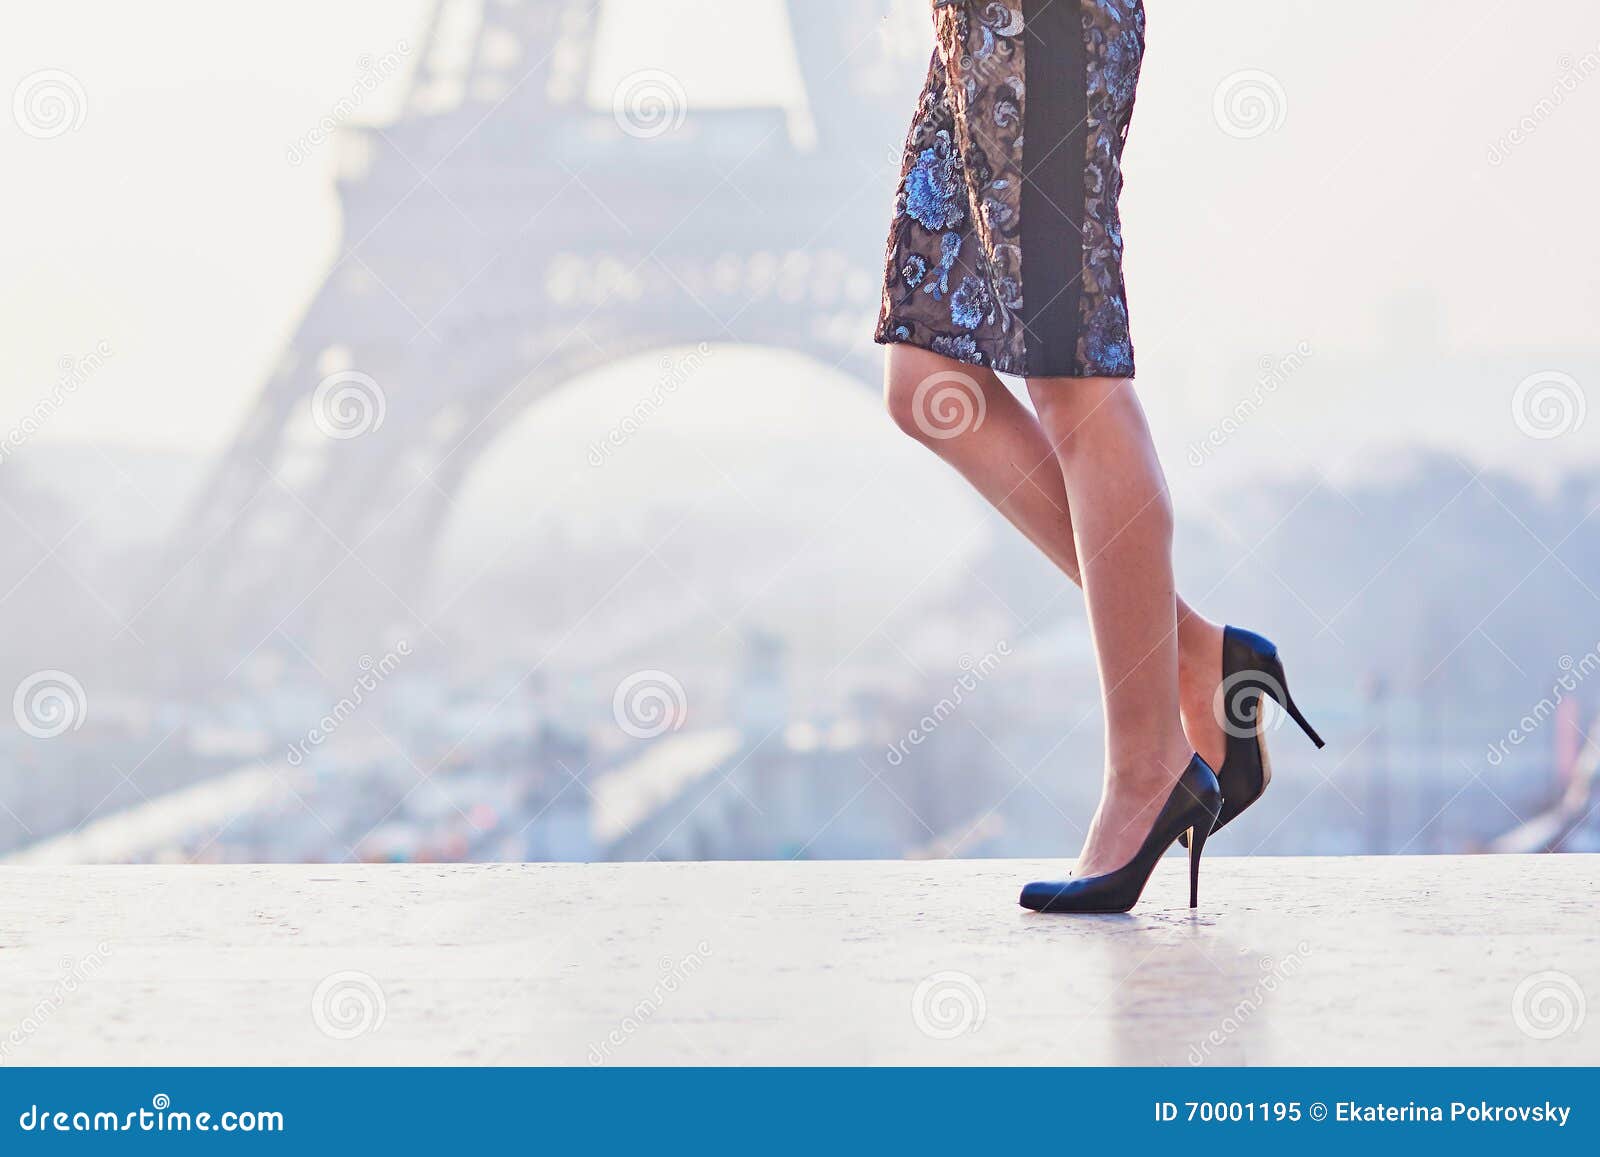 Eiffel tower: high heels, anklet, feet | Veronique_XXY | Flickr